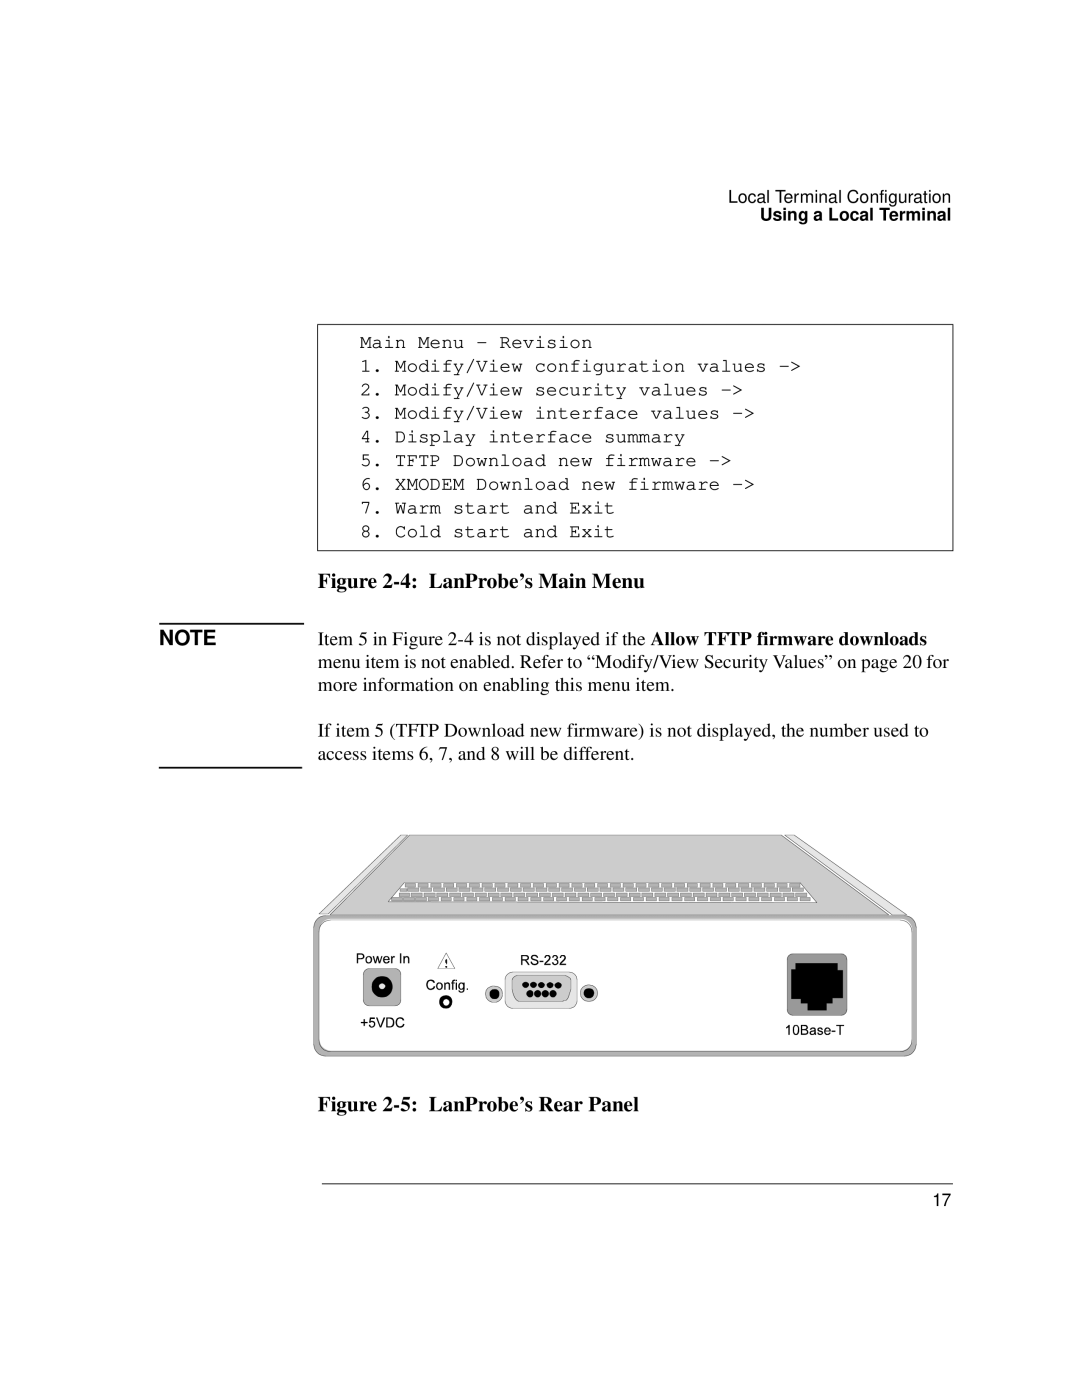 IBM 4986B LanProbe manual 4 LanProbe’s Main Menu, 5 LanProbe’s Rear Panel 